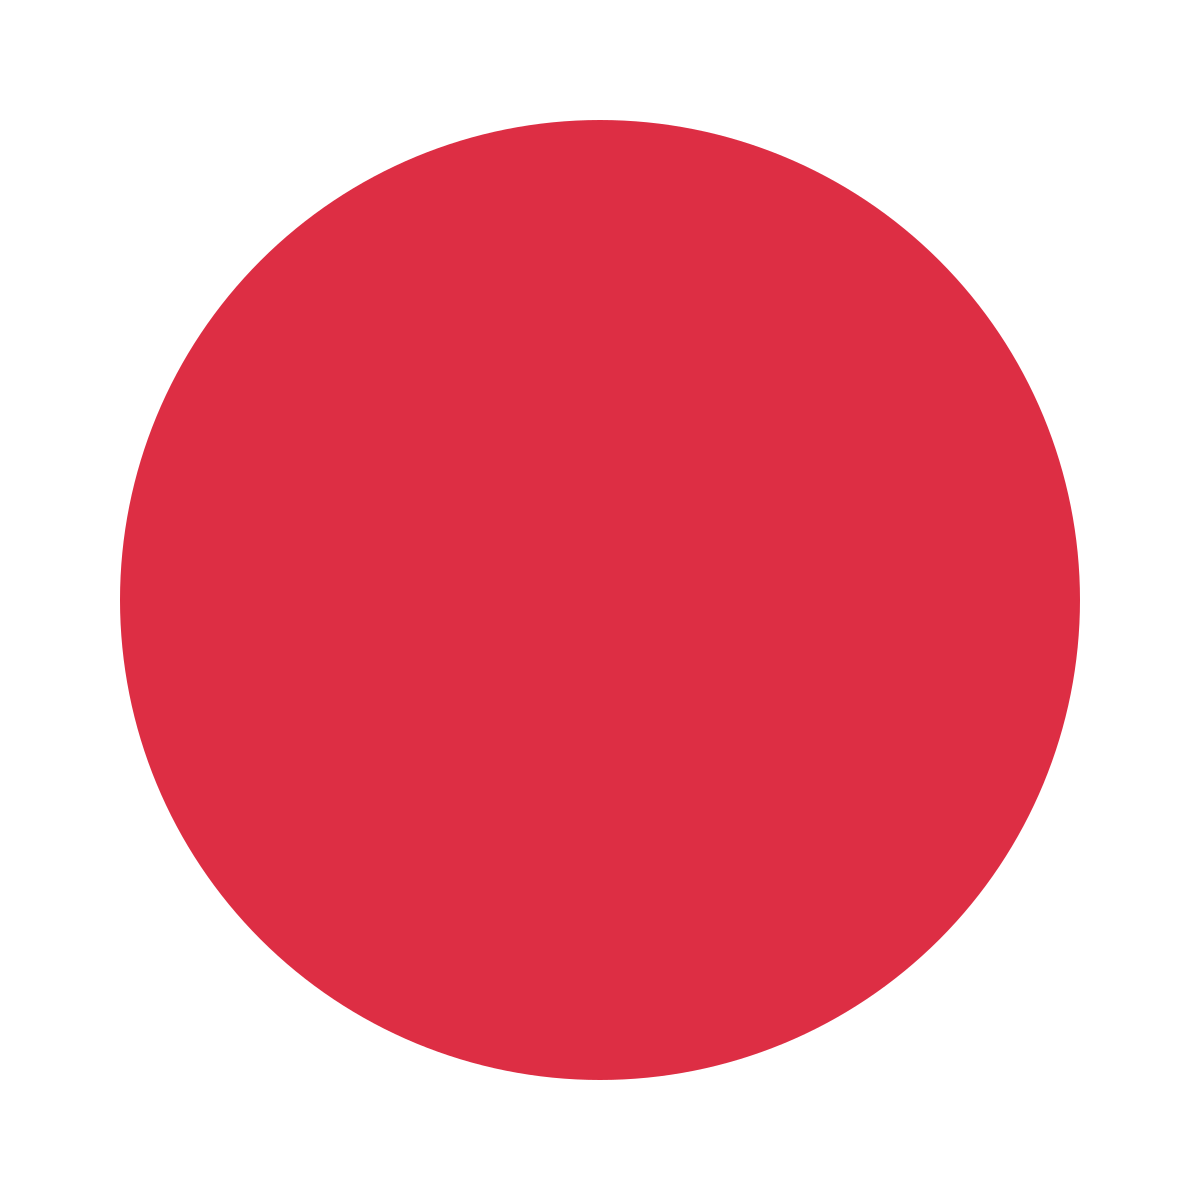 red dot on wechat emoji